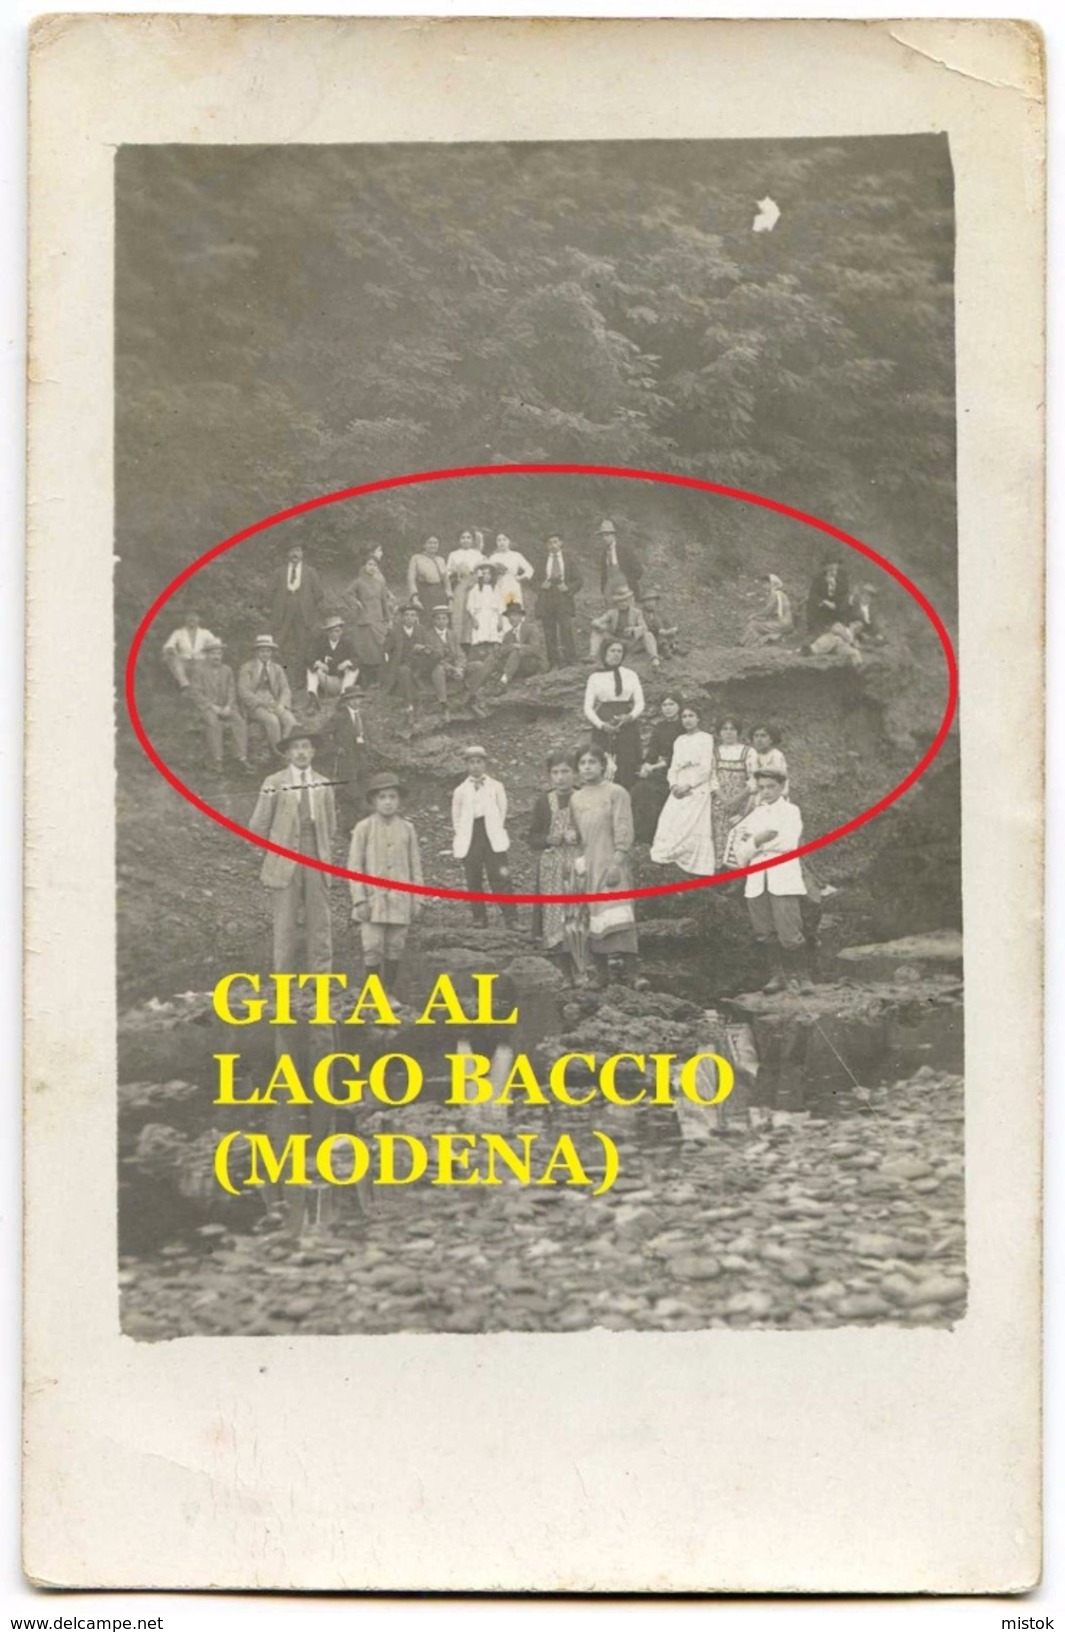 GITA Al LAGO BACCIO (Pievepelago - Modena) Cartolina Fotografica (Frignano) - Modena